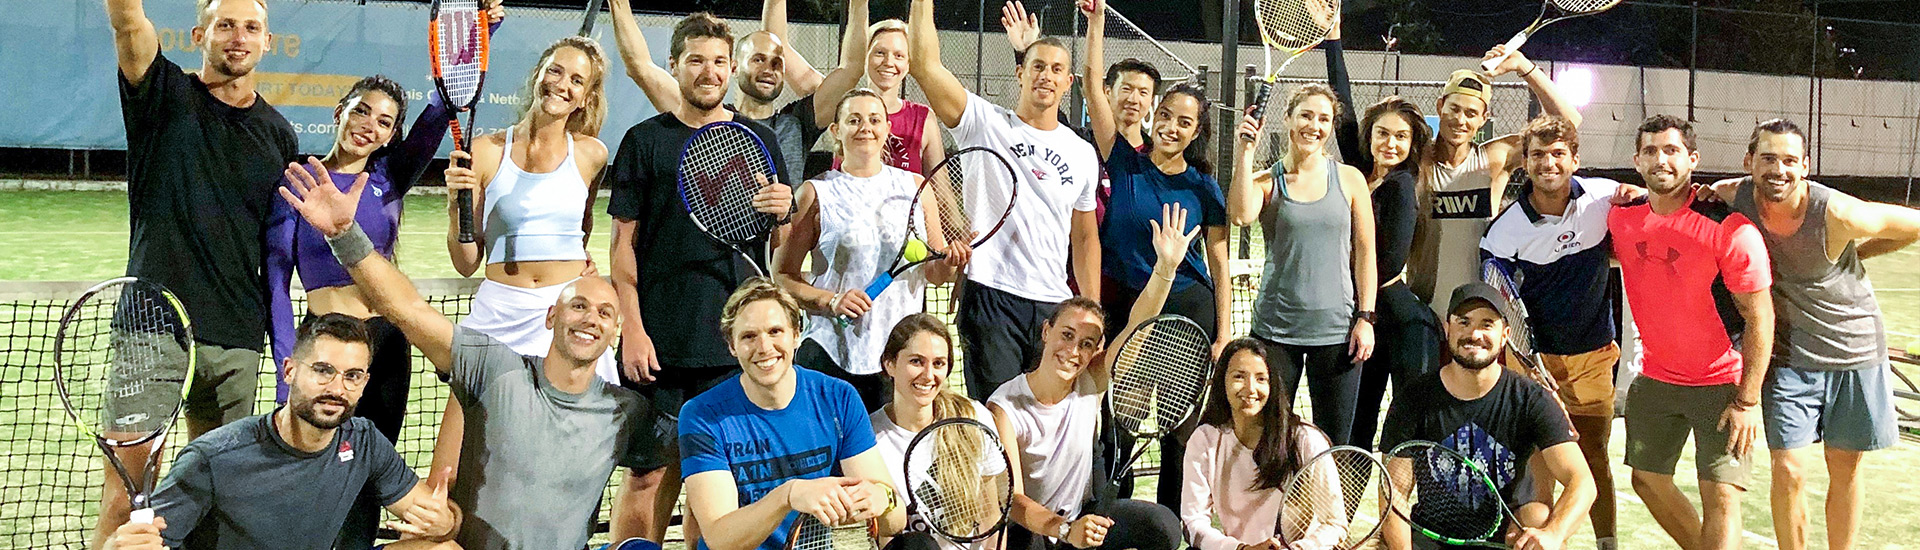 Adult Tennis Lessons in Sydney Parklands Sports